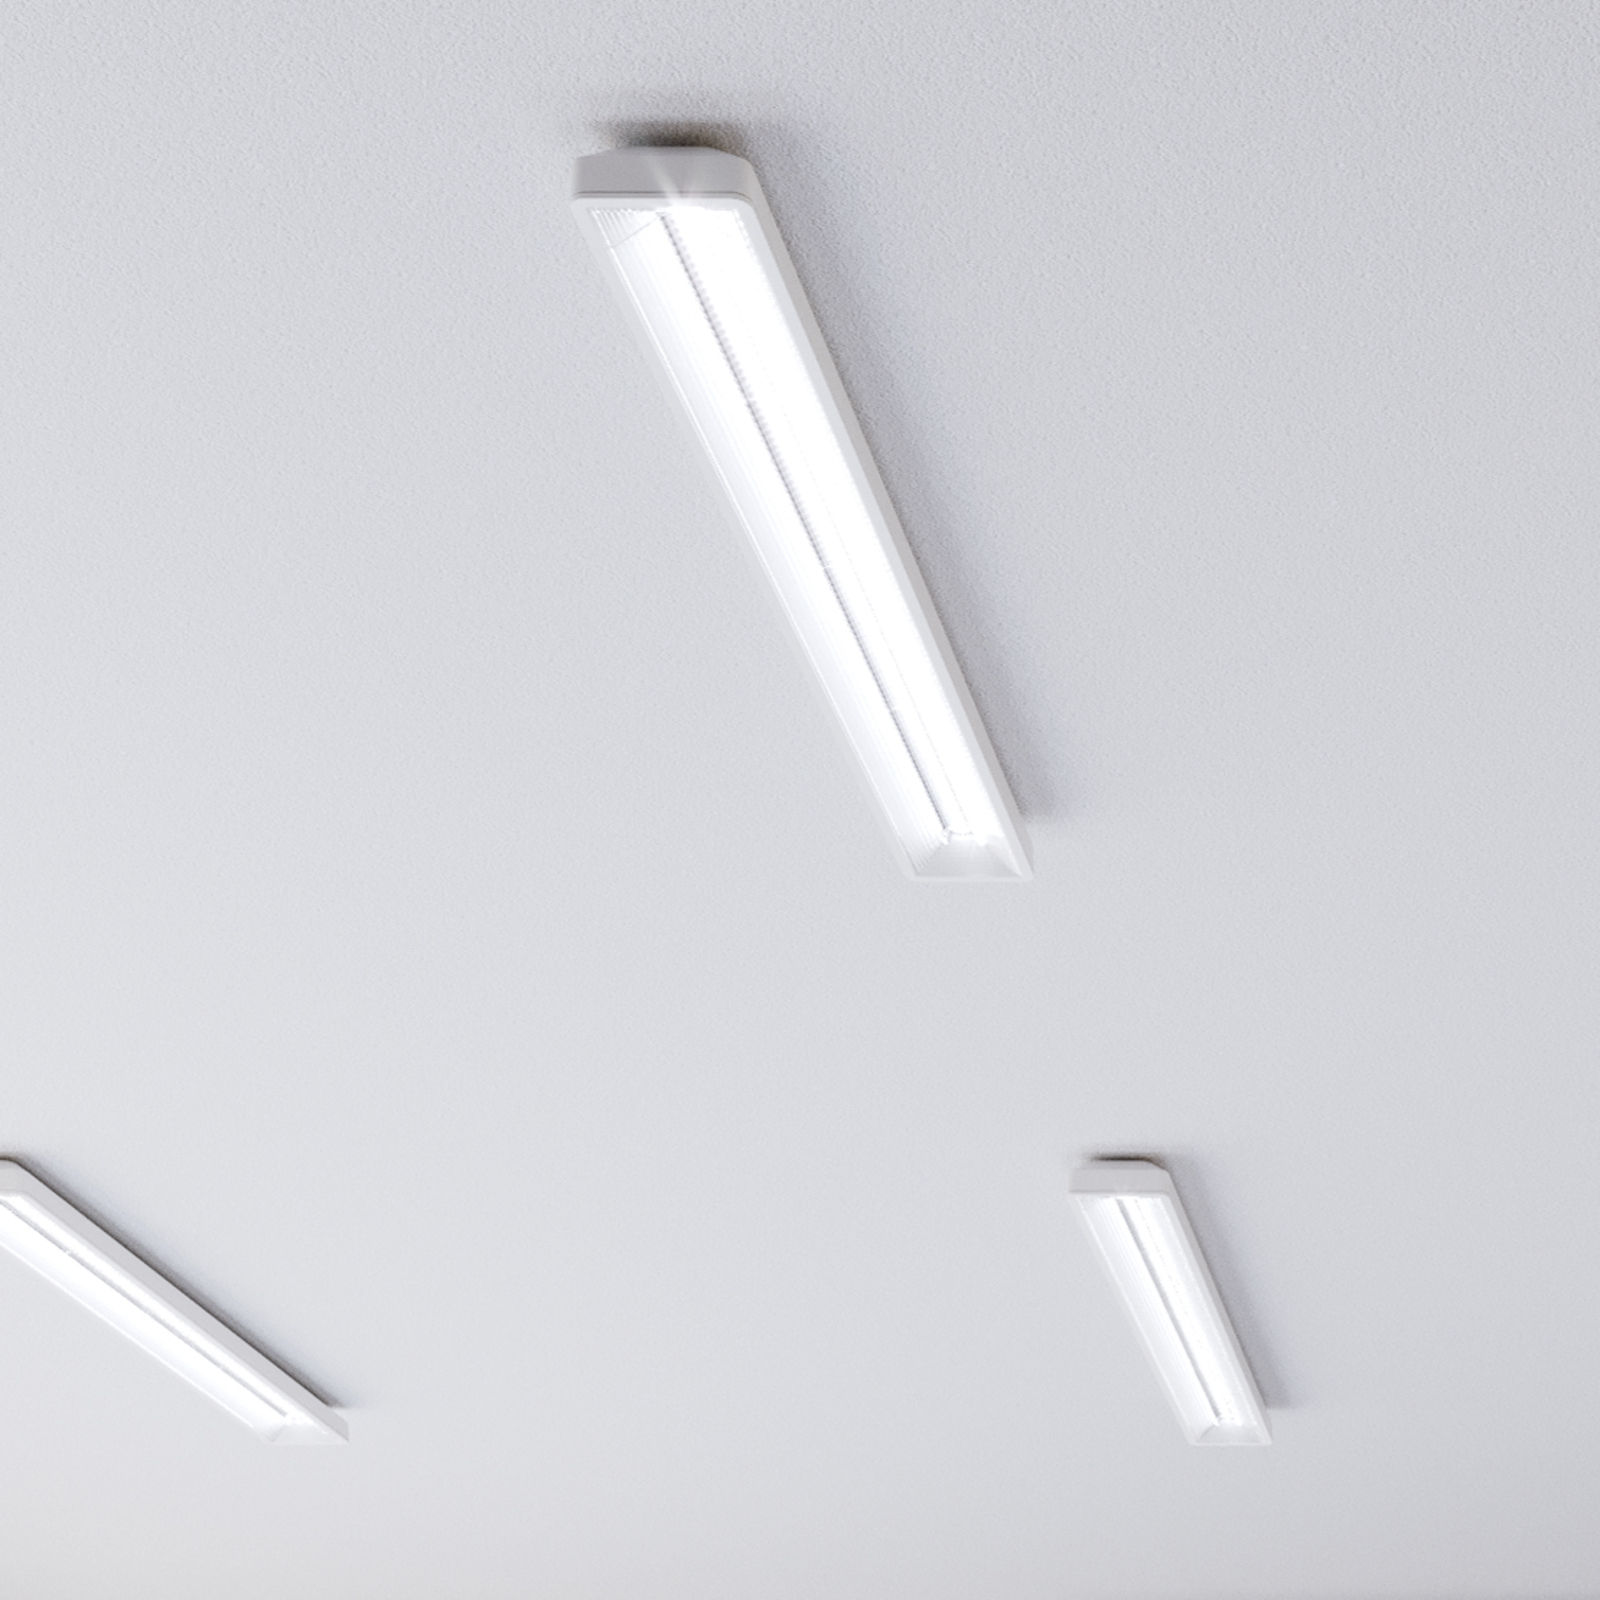 Siteco Taris LED ceiling light 123 cm DALI EB